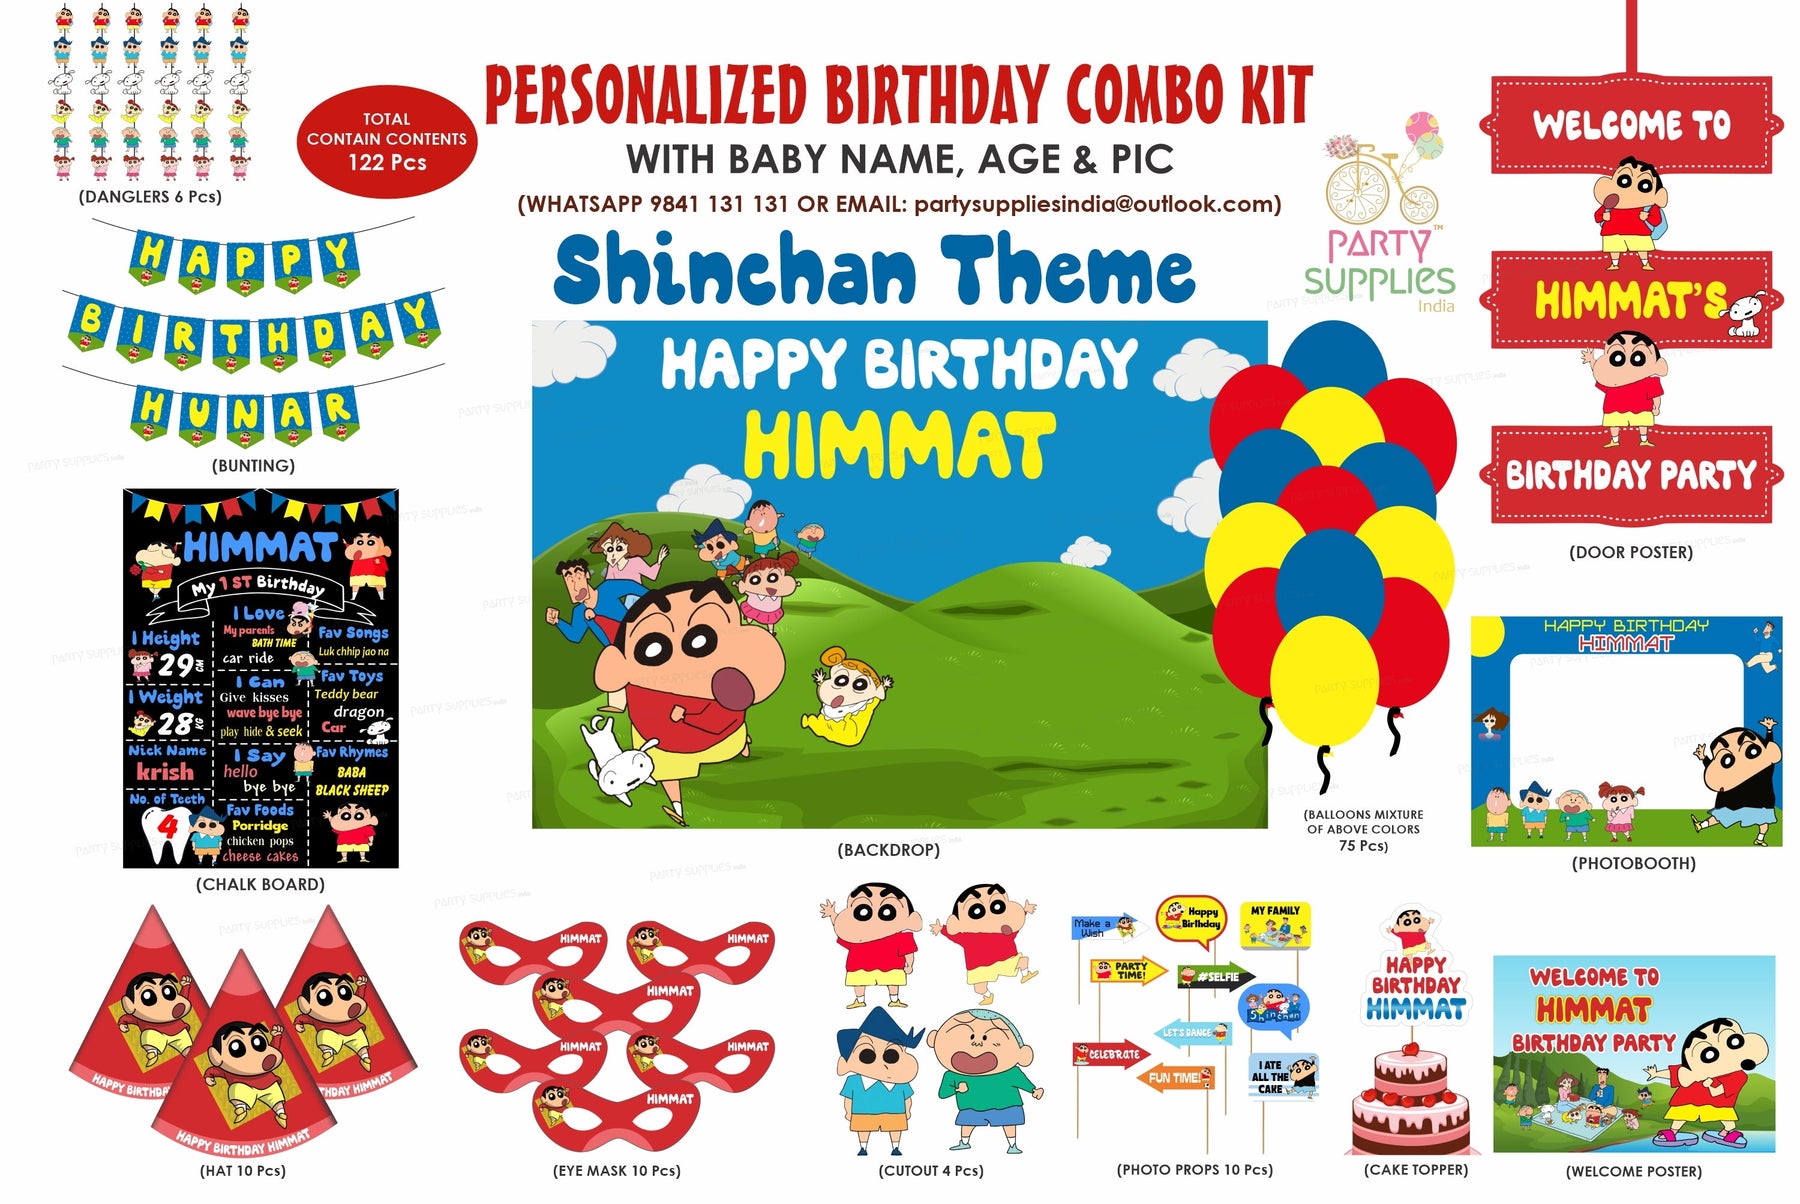 PSI Shinchan Theme Classic Kit